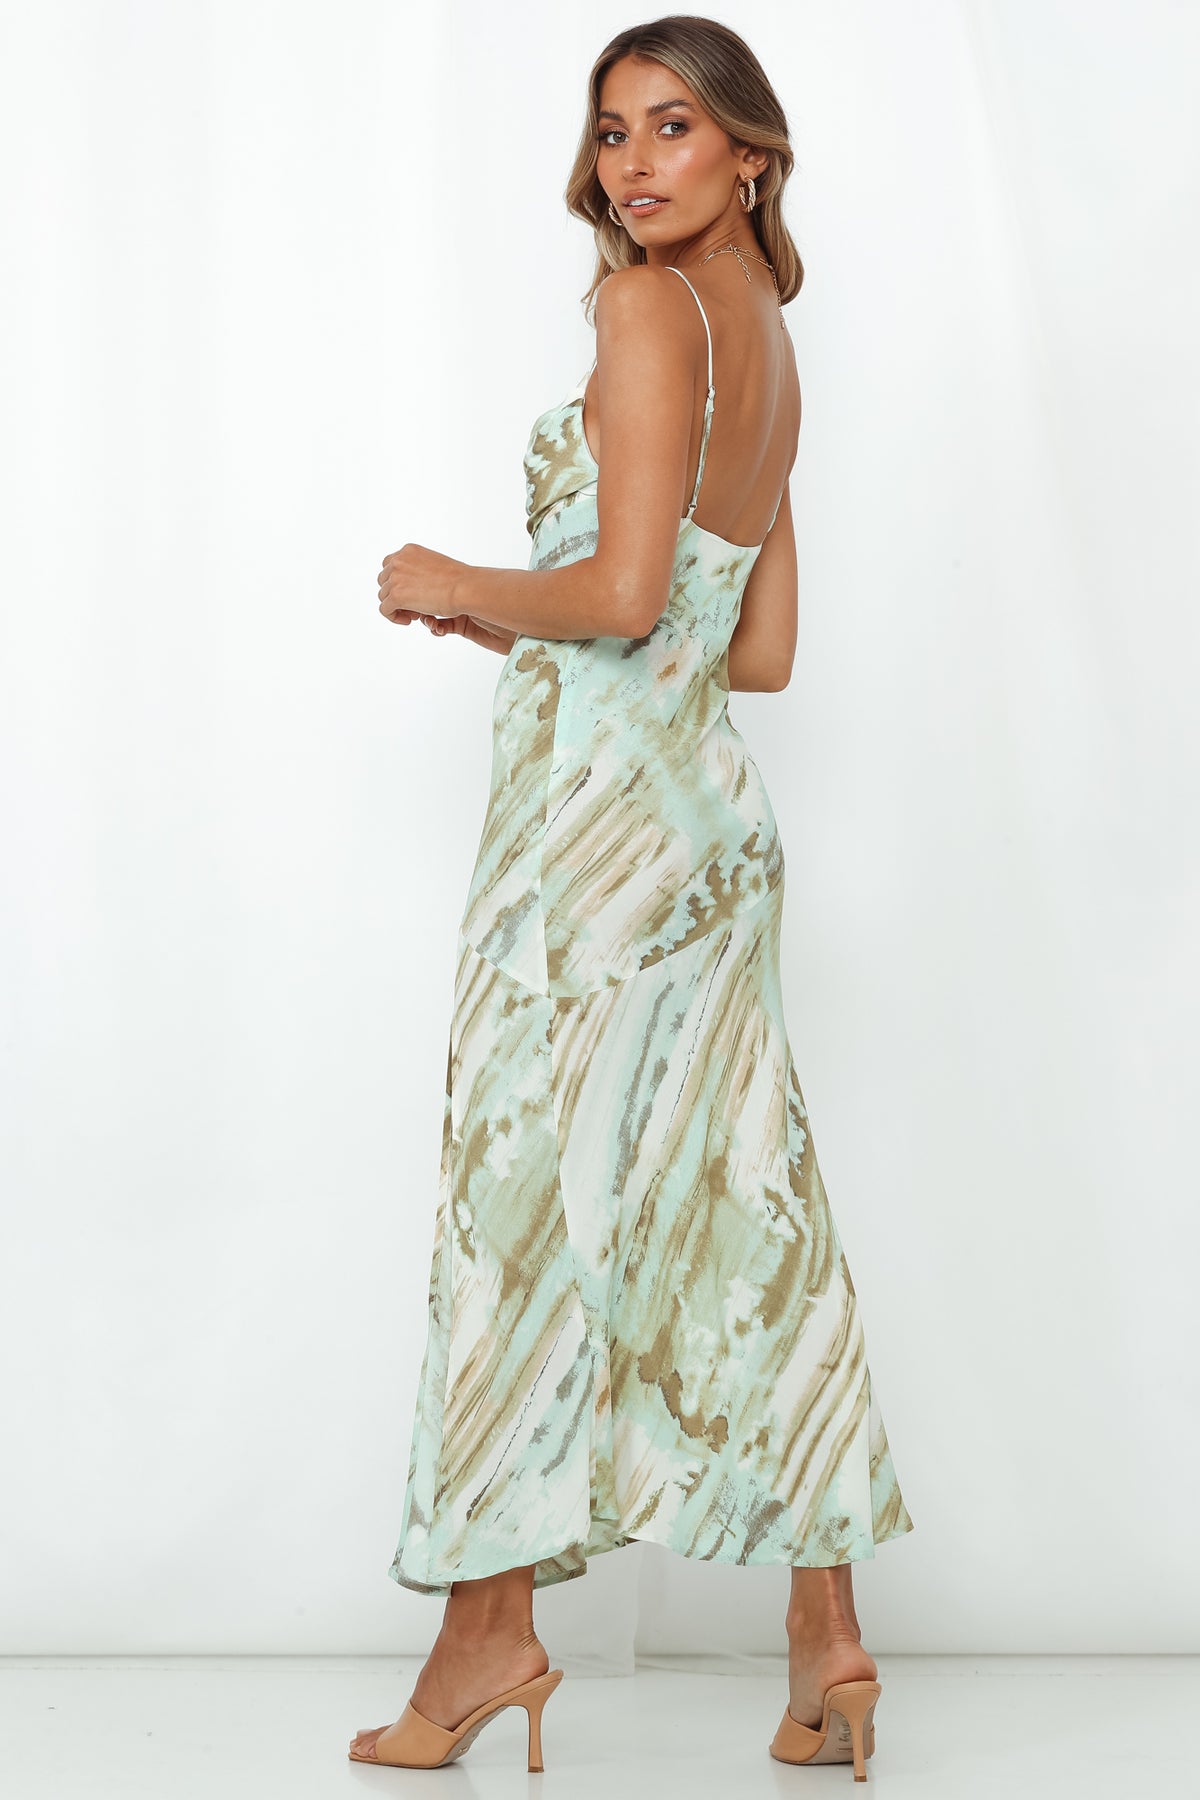 Shop Formal Dress - Full Time Glam Girl Midi Dress Mint sixth image